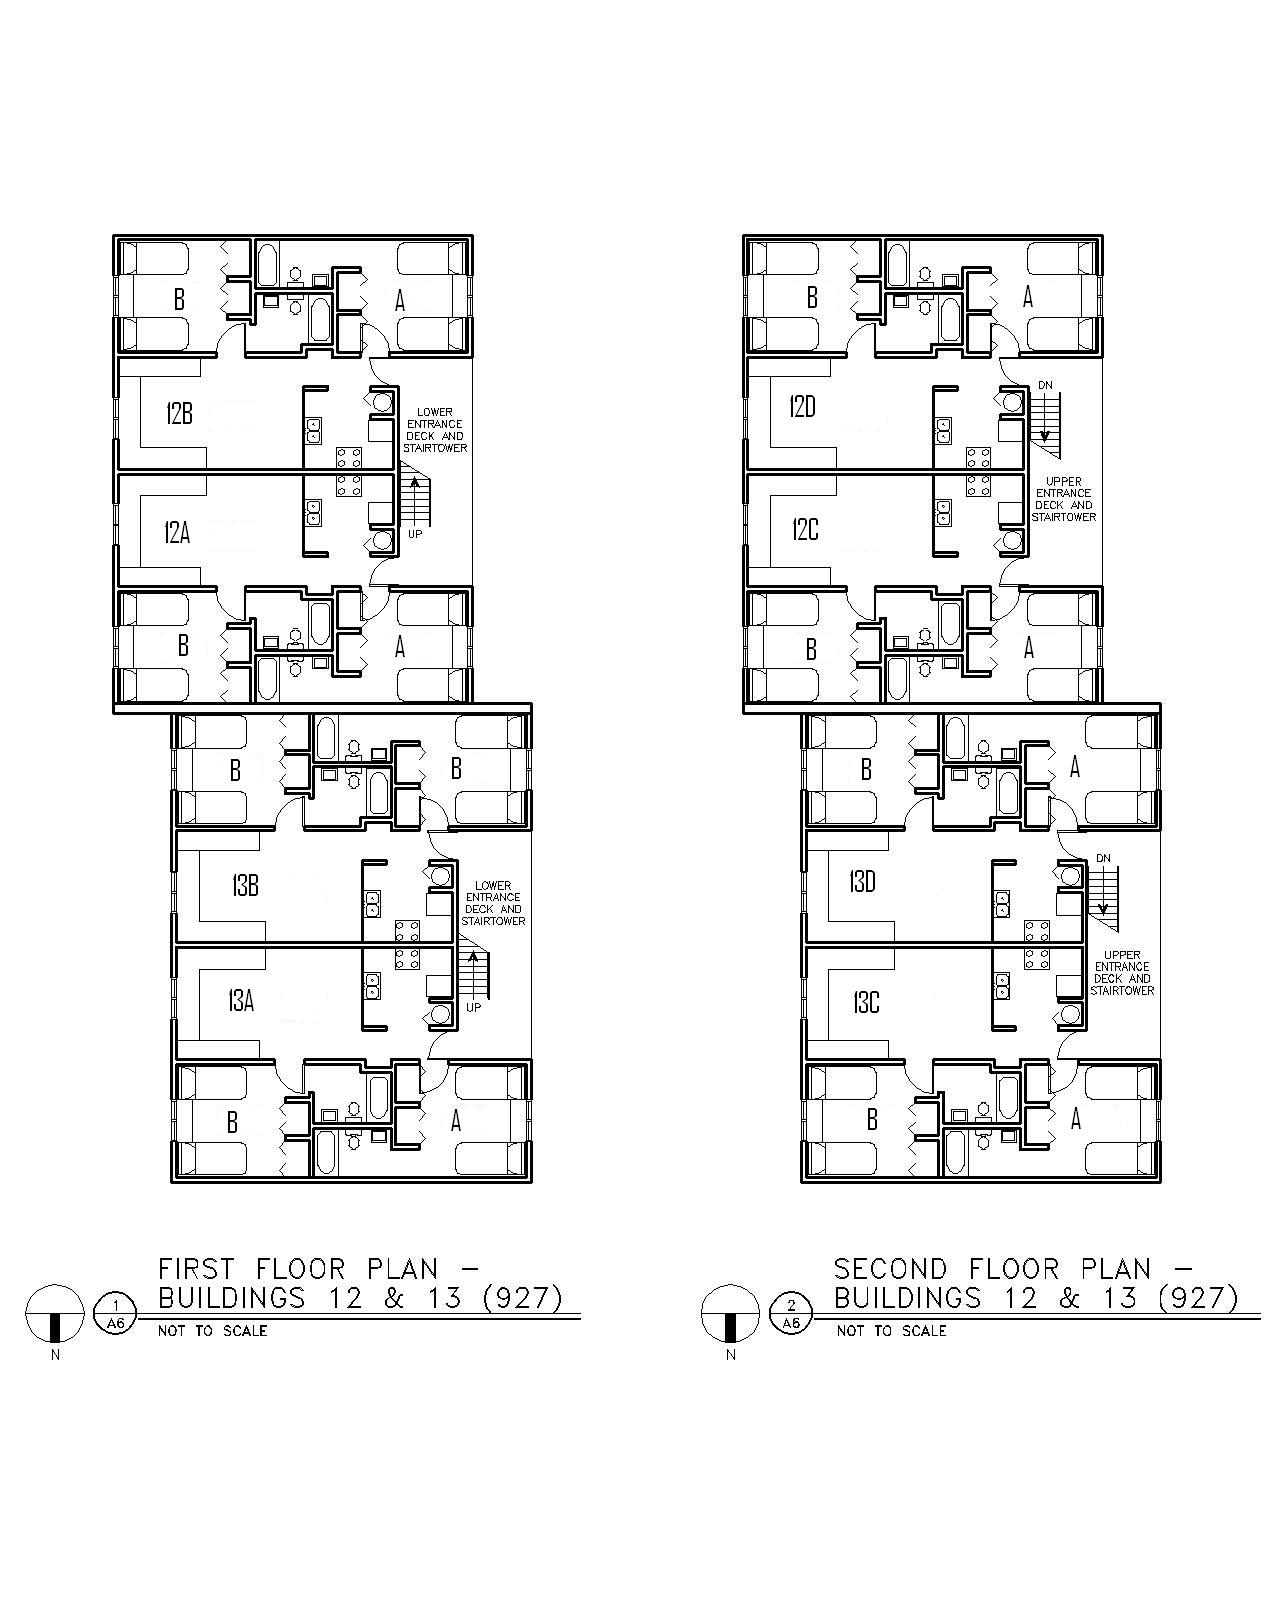 Floor Plan for Buildings 12 & 13